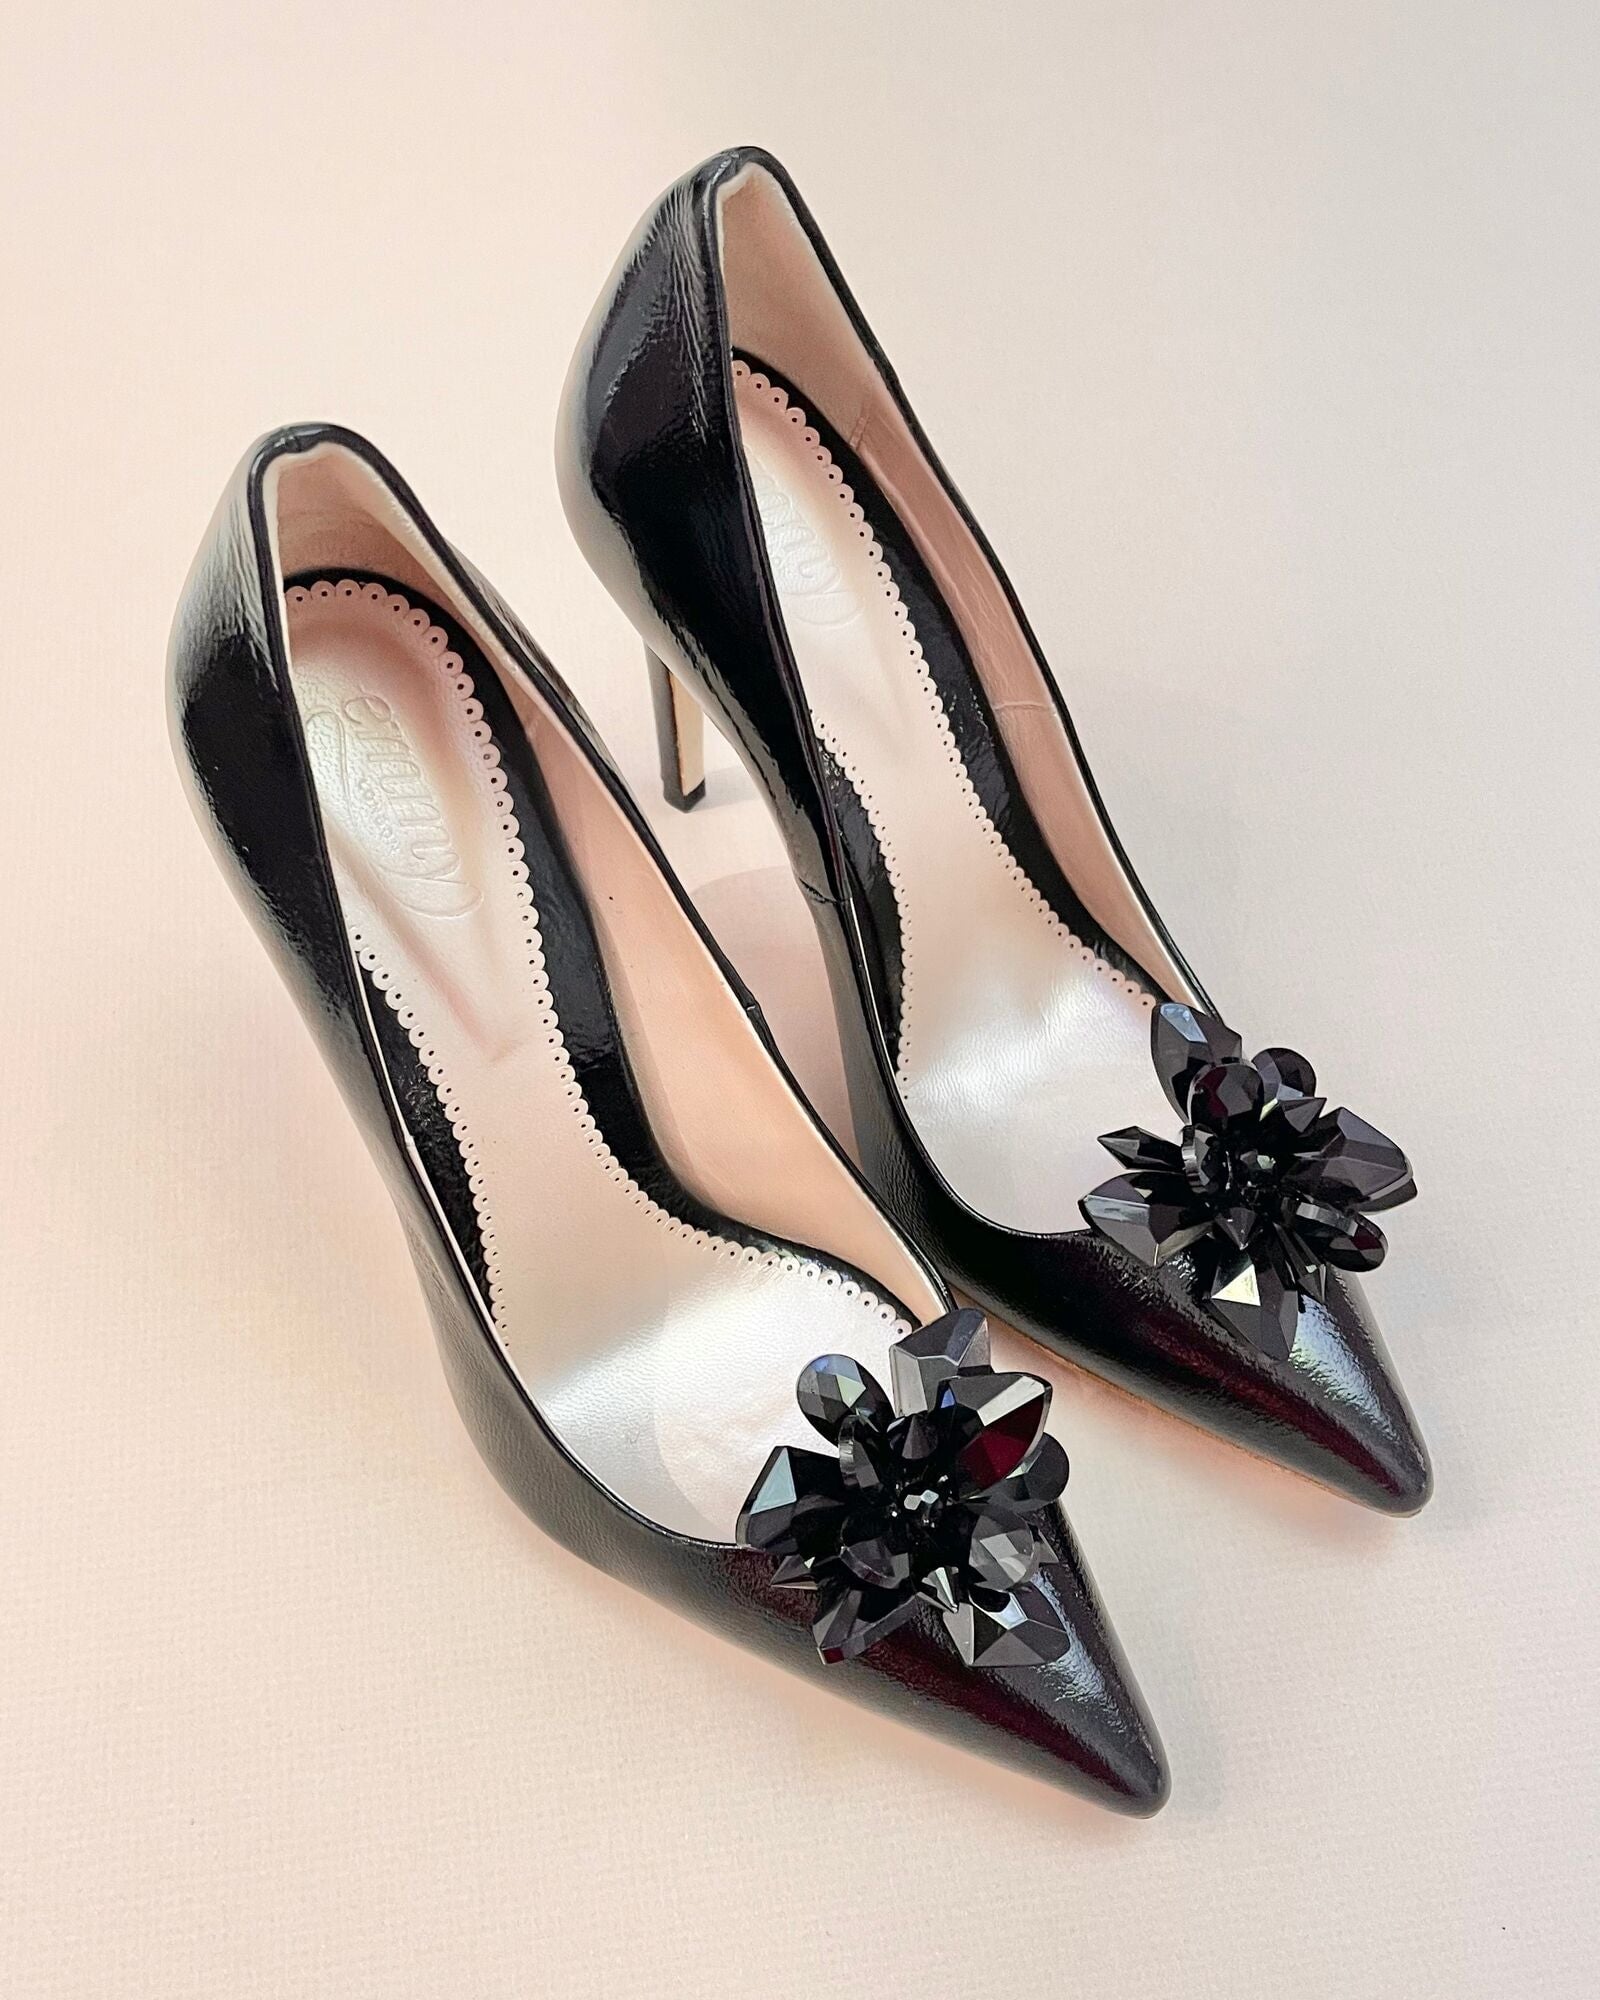 Rebecca High Heel Fashion Shoe Black Leather Pointed Court Shoe  image